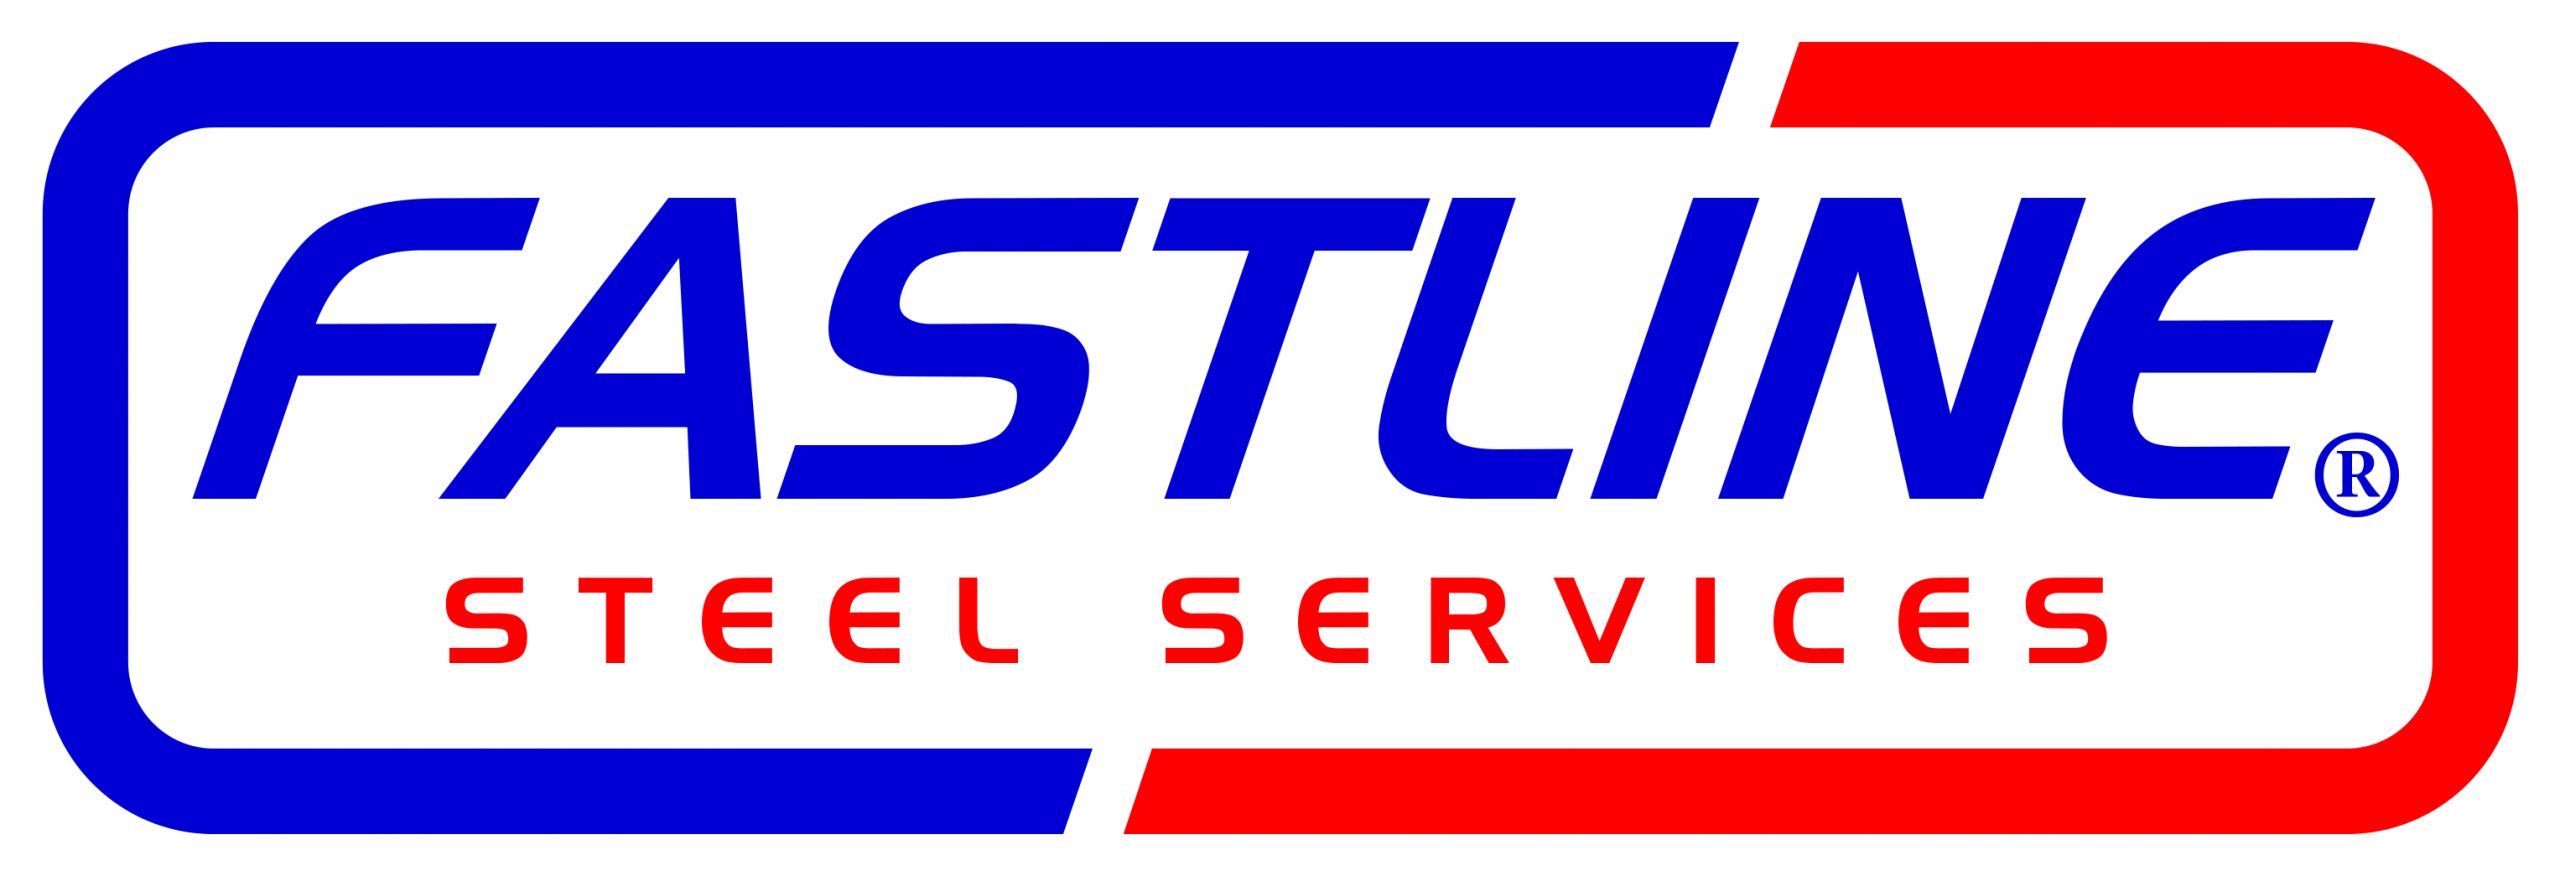 Fastline Steel Services